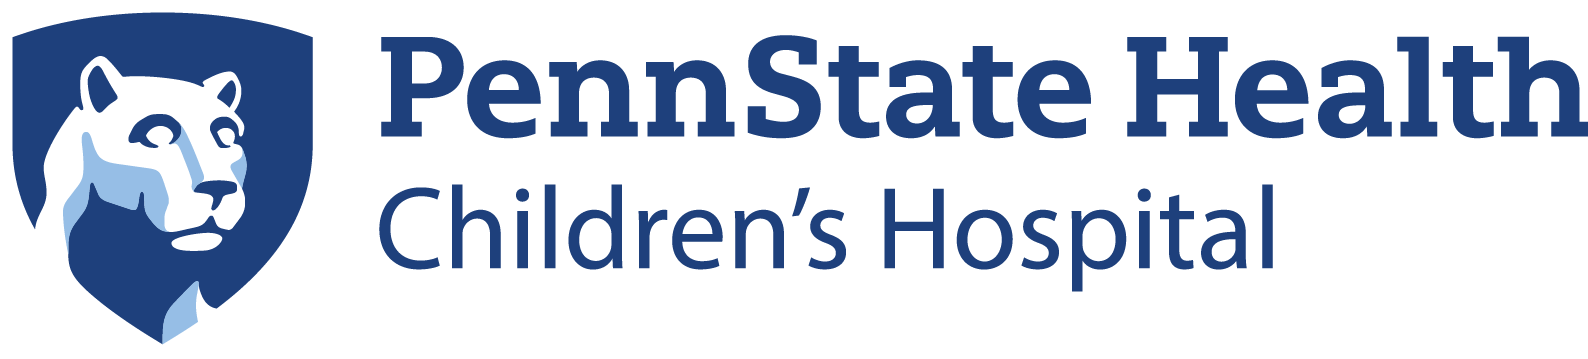 children's hospital homepage